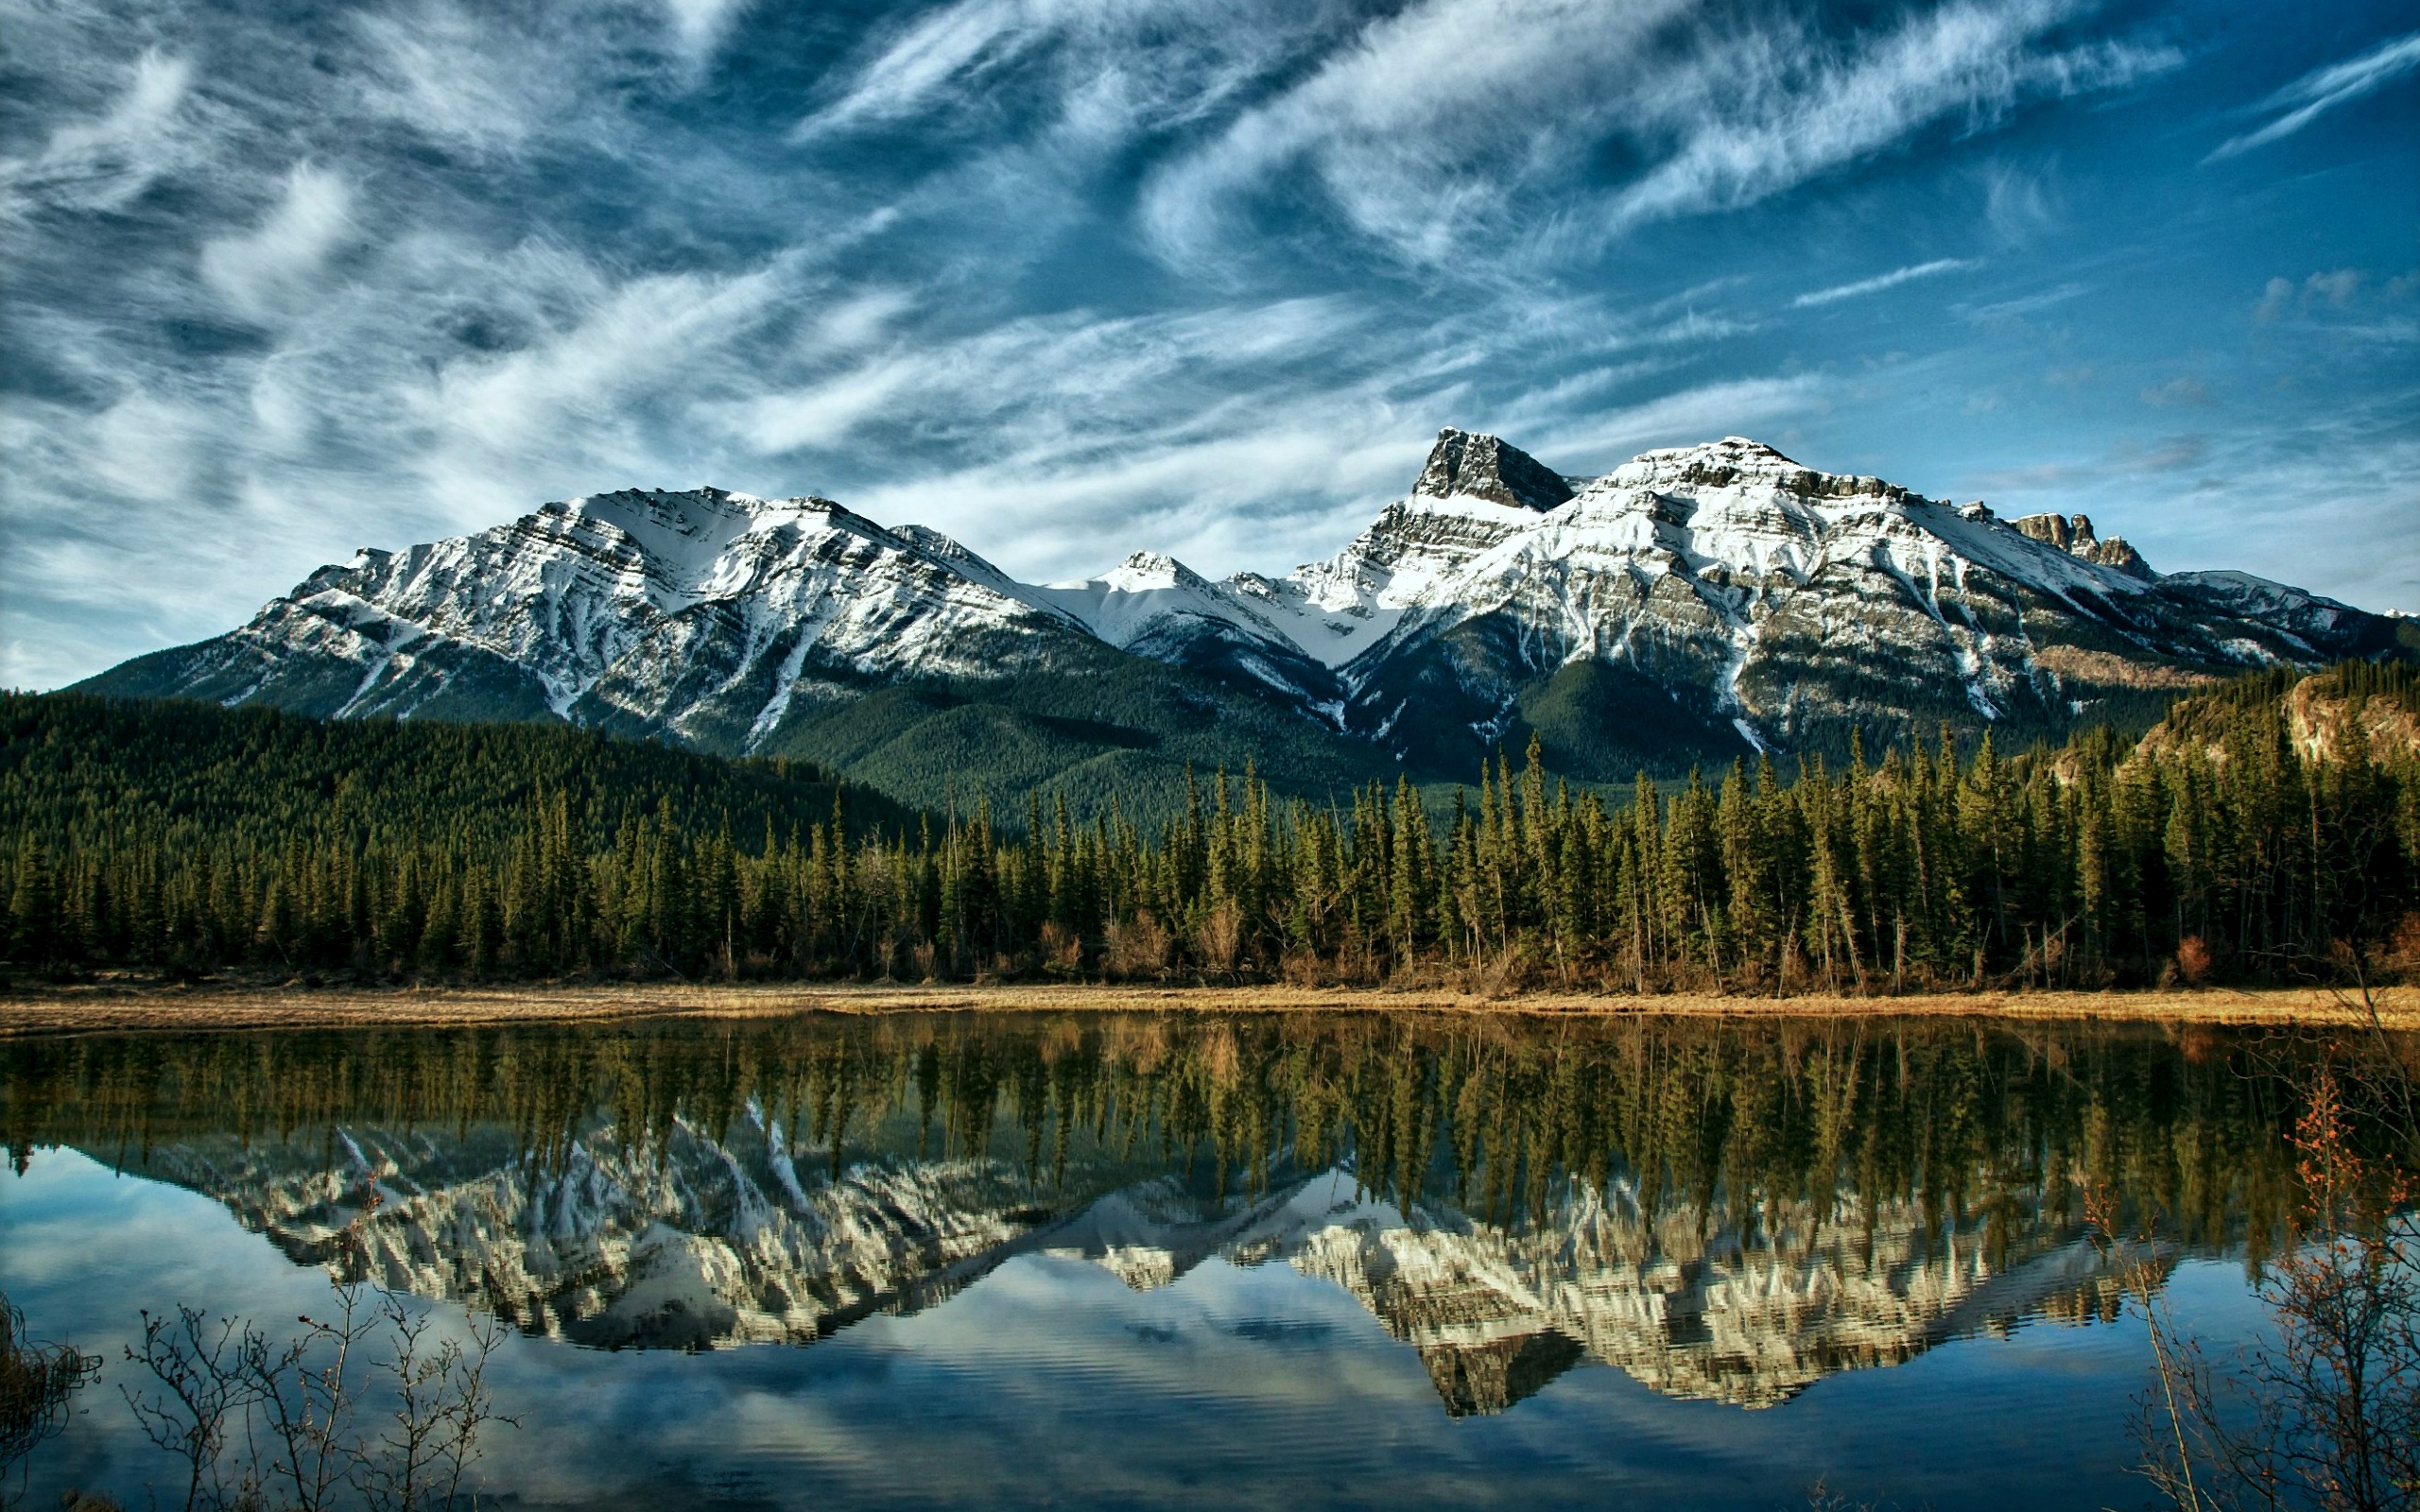 Alberta Mountains Canada for 2560 x 1600 widescreen resolution